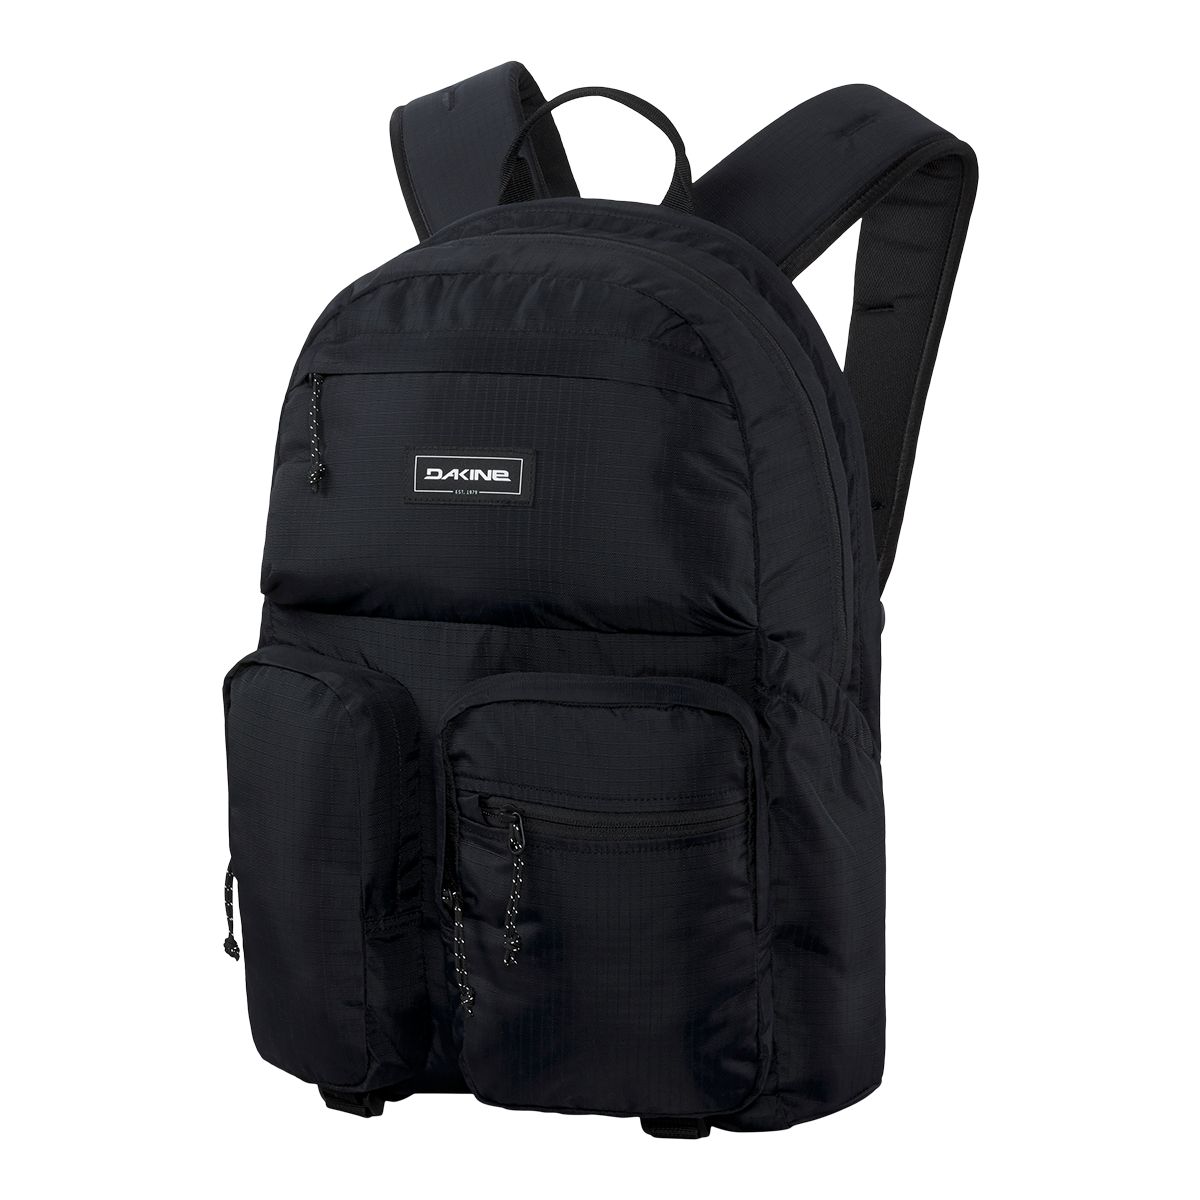 Dakine Method DLX 28 Backpack